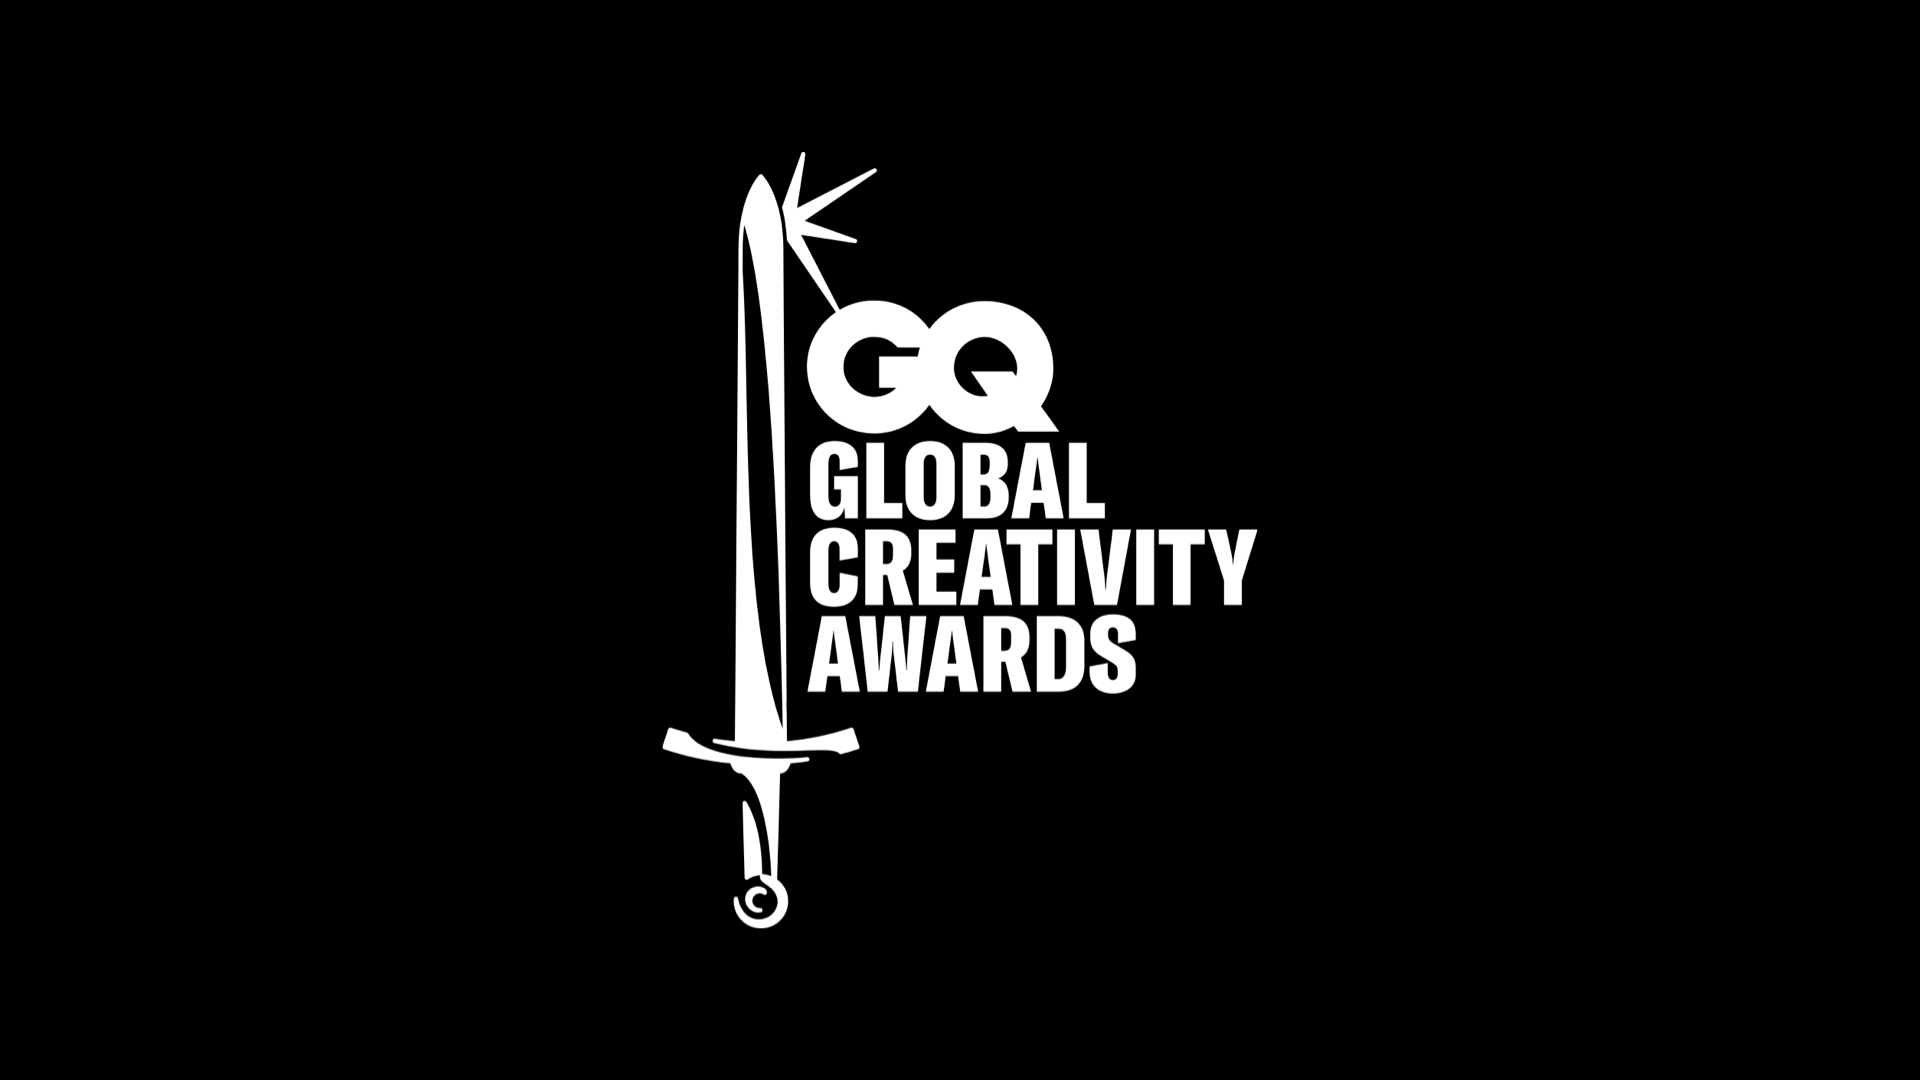 GQ Global Creativity Awards